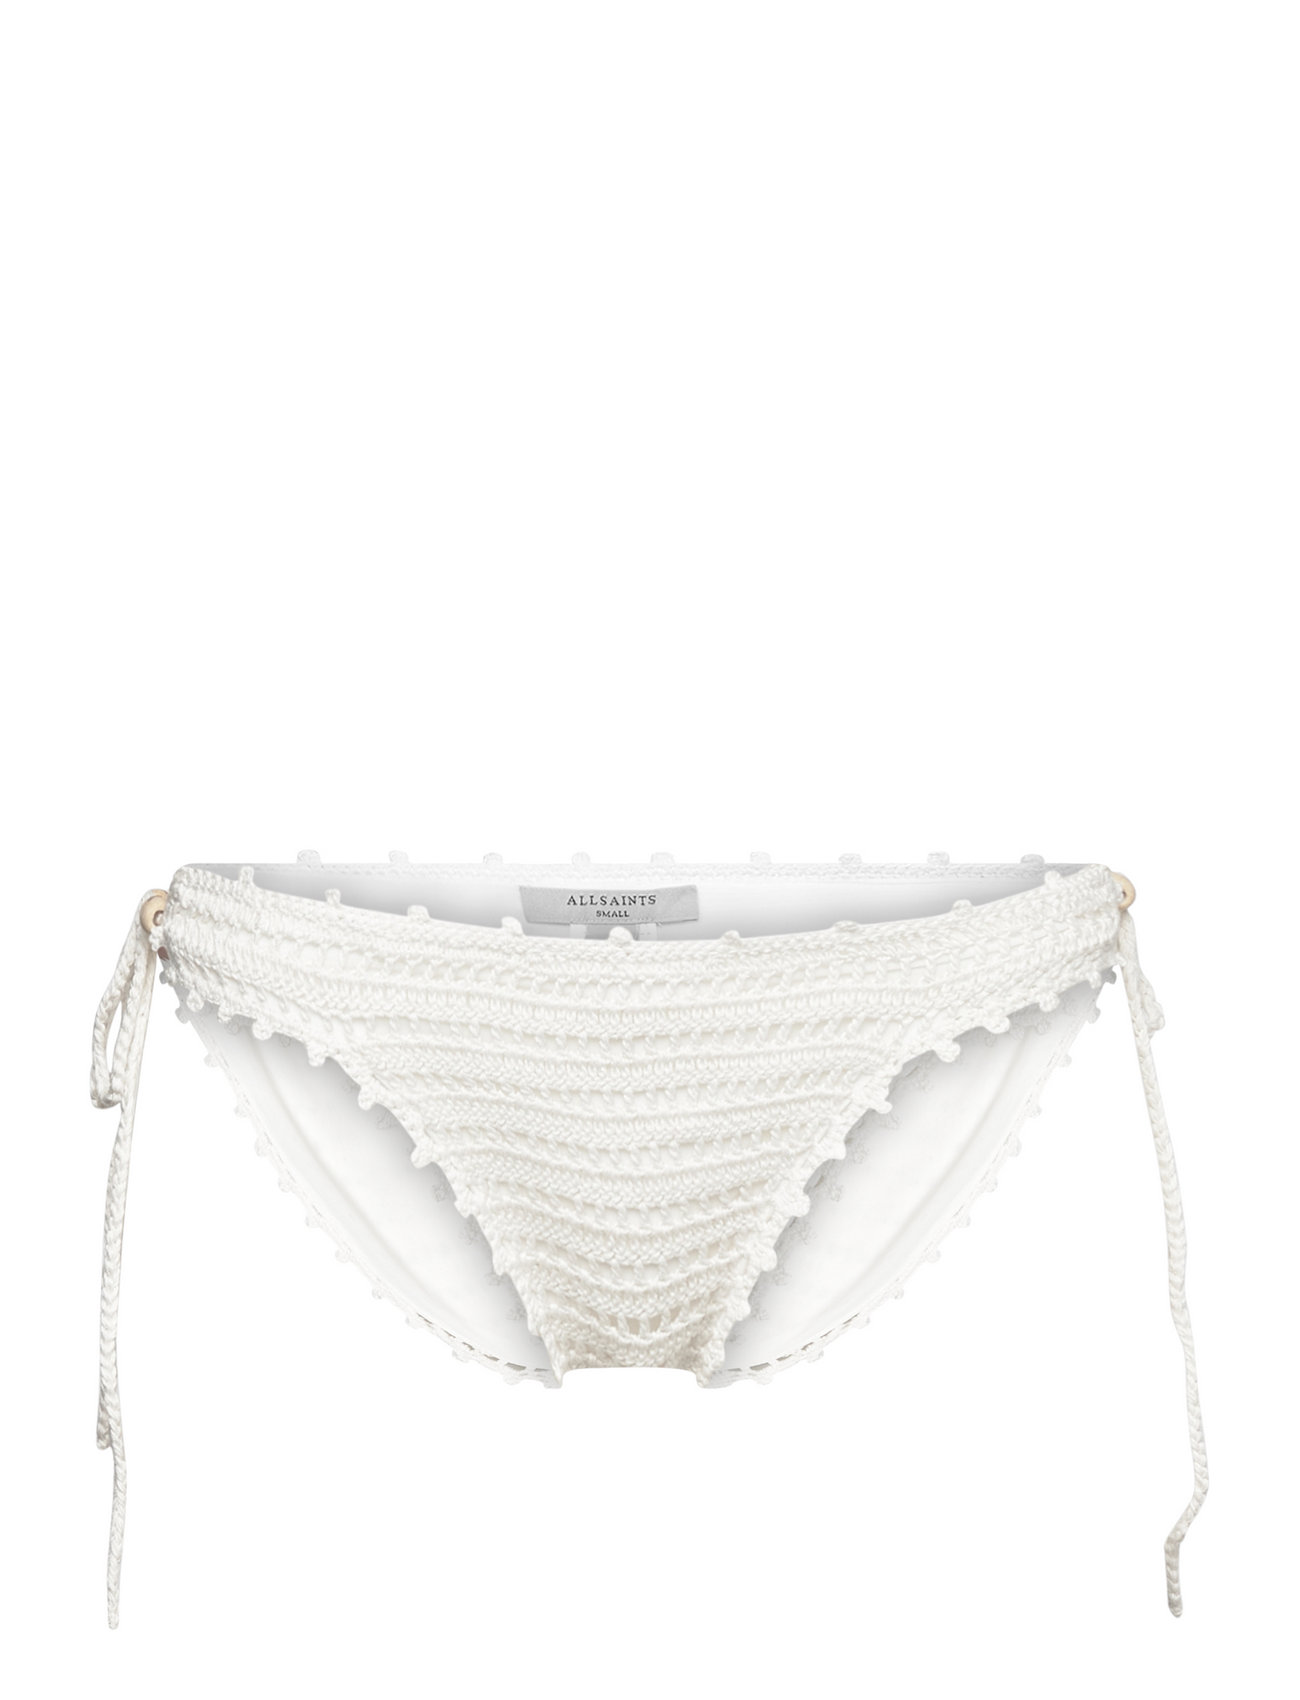 AllSaints "Ola Crochet Bikini Bottom Swimwear Bikinis Bottoms Side-tie White AllSaints"